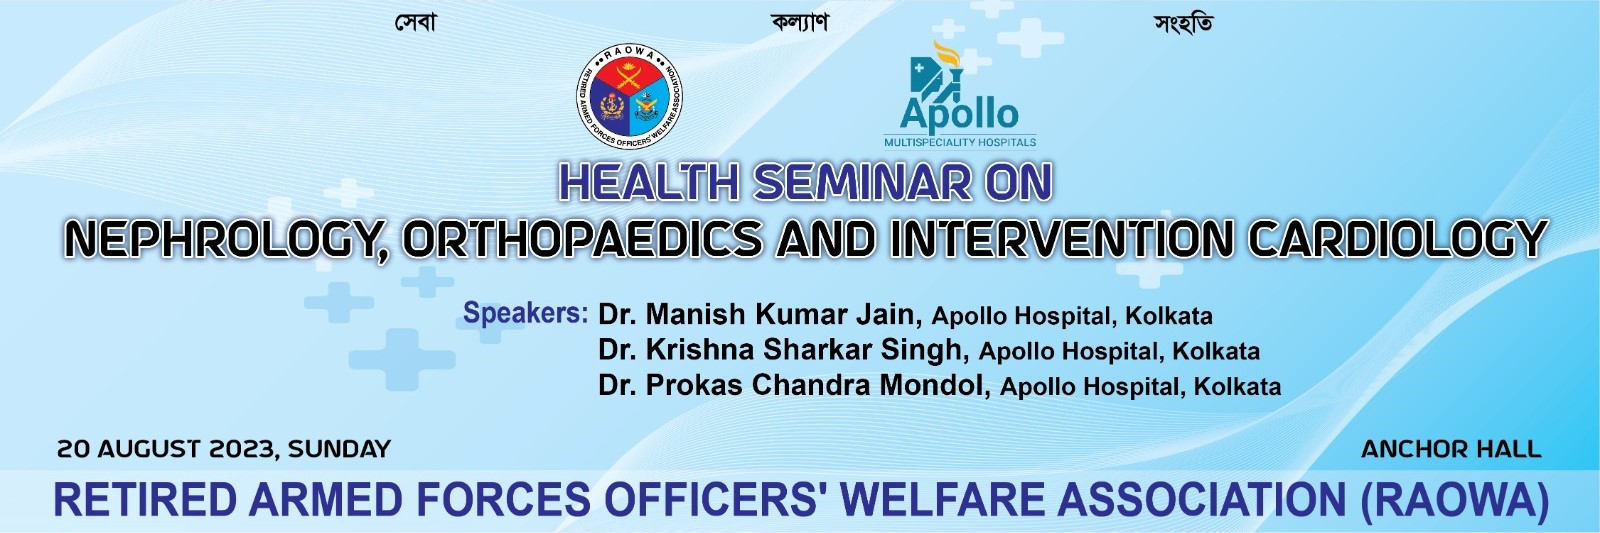 Health Seminar on Nephrology, Orthopaedics, Intervention Cardiology 